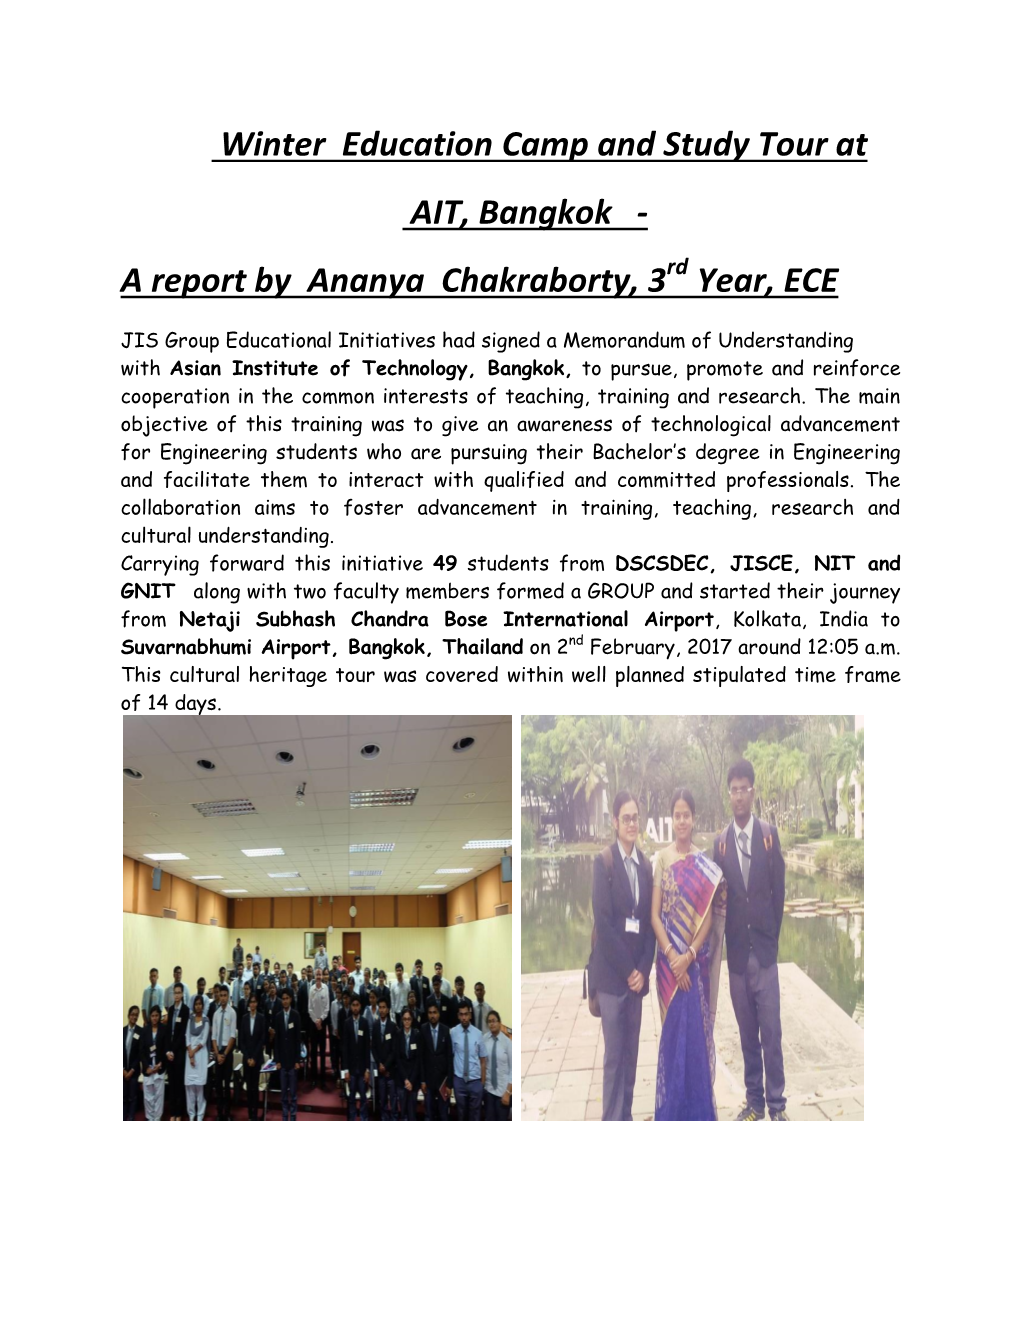 Winter Education Camp and Study Tour at AIT, Bangkok - a Report by Ananya Chakraborty, 3Rd Year, ECE